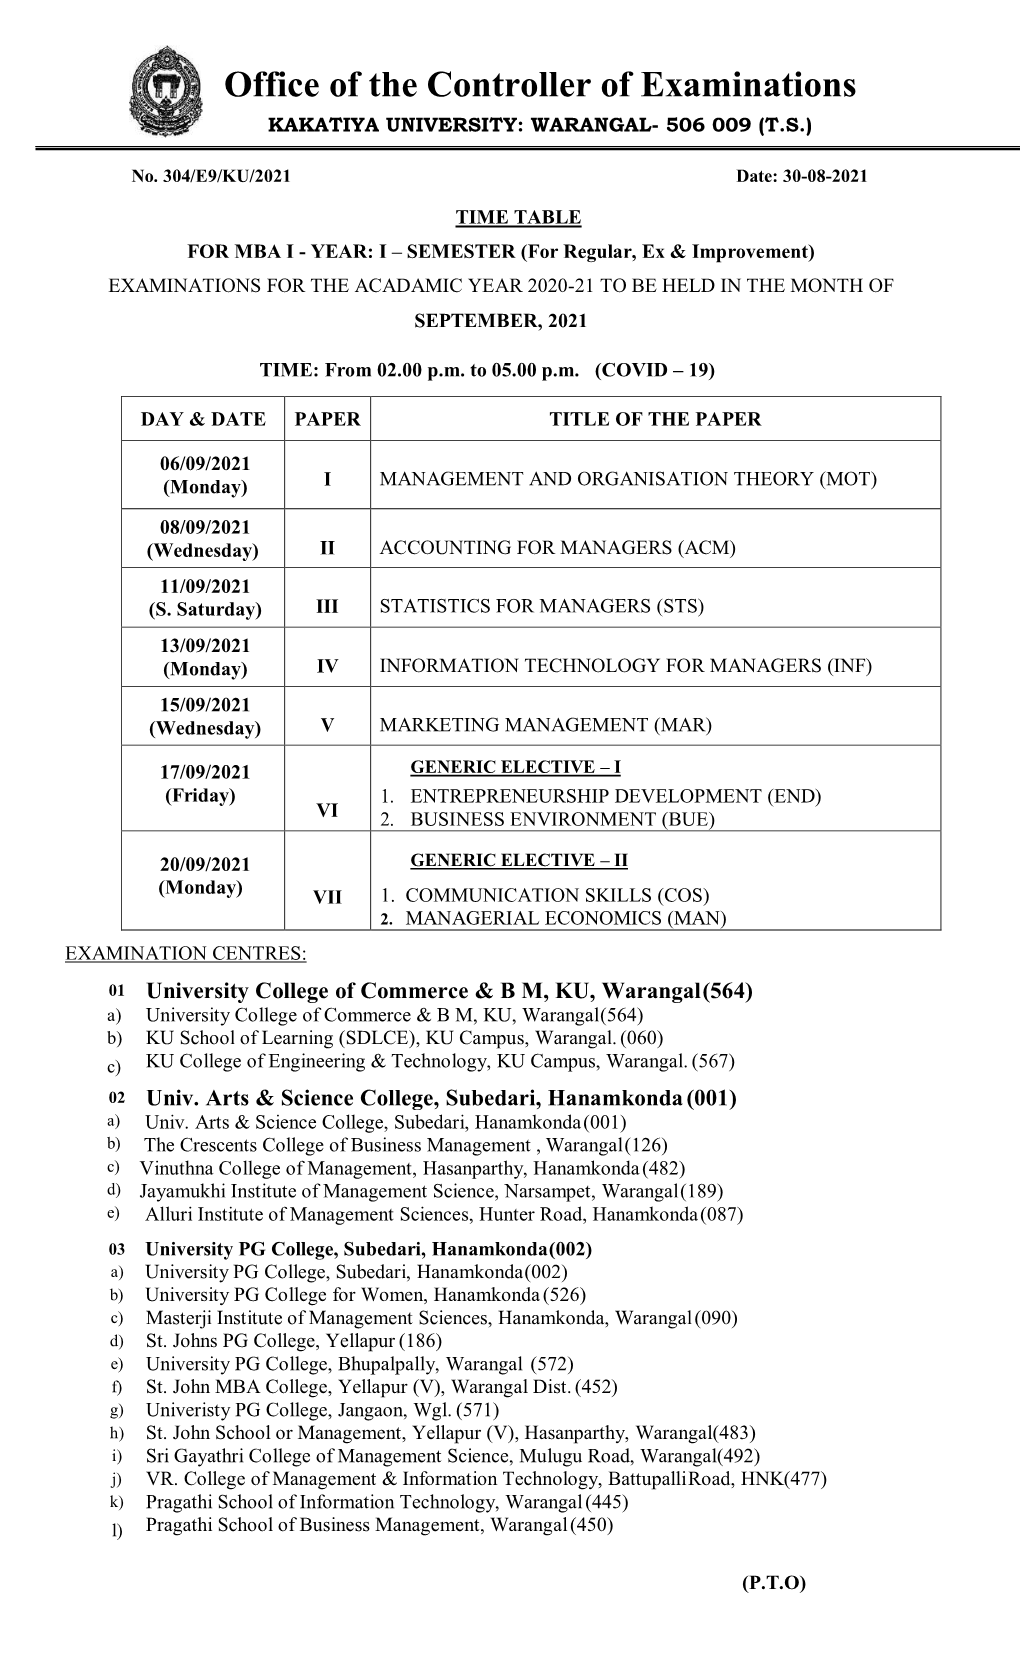 Office of the Controller of Examinations KAKATIYA UNIVERSITY: WARANGAL- 506 009 (T.S.)